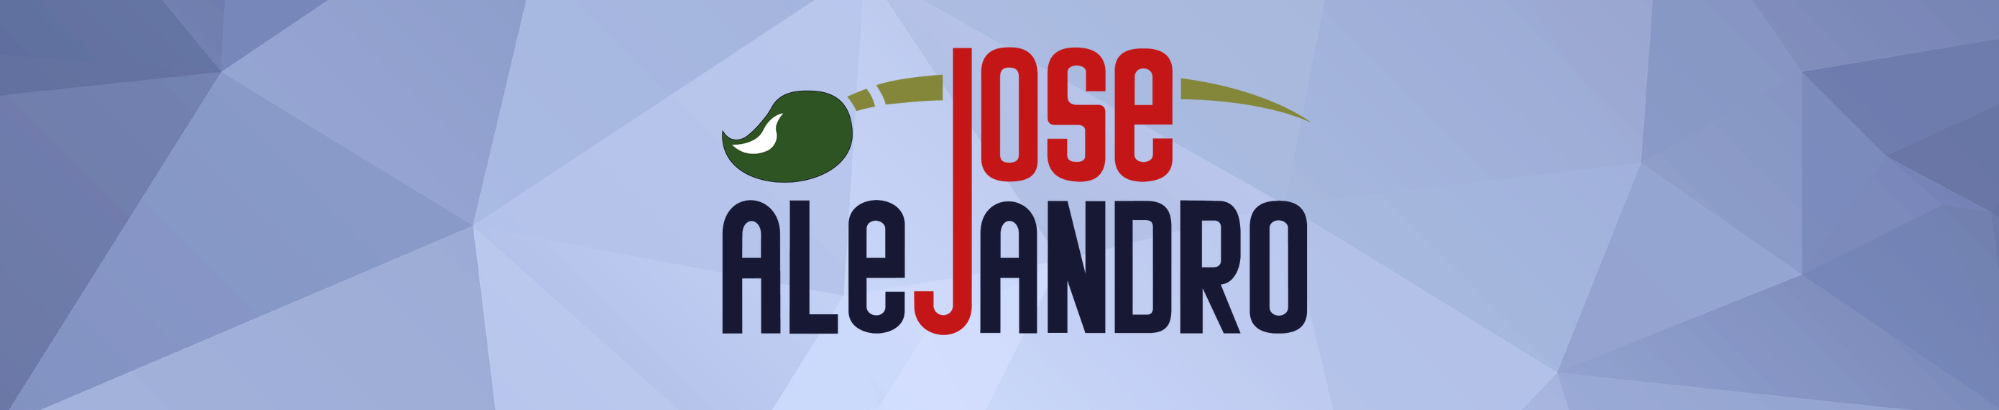 Jose Alejandros profilbanner